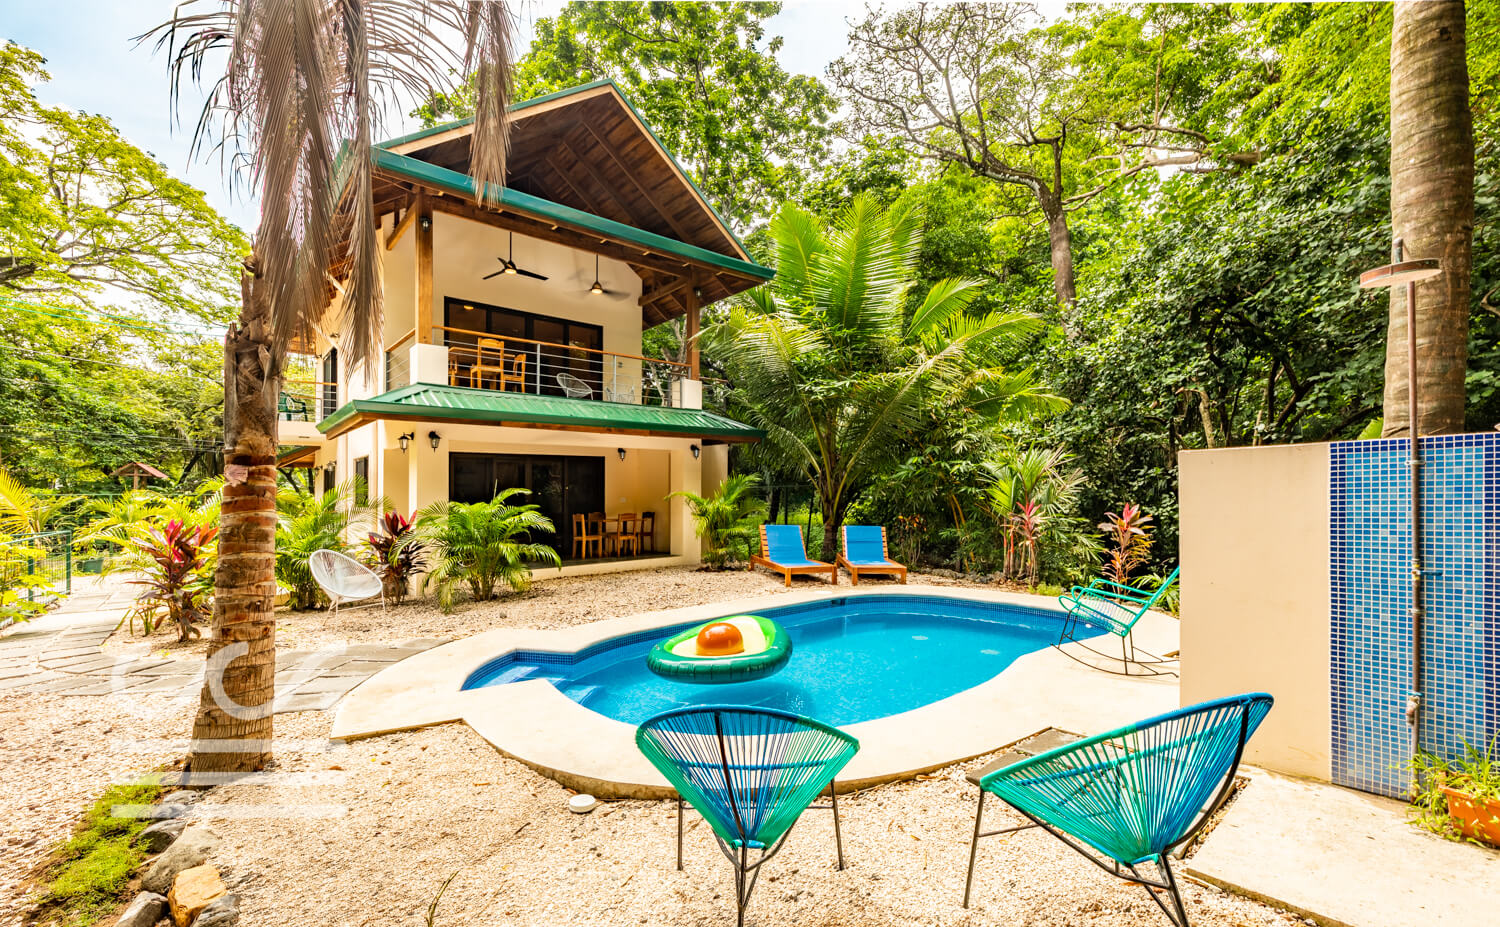 Casa-Nambi-Wanderlust-Realty-Real-Estate-Rentals-Nosara-Costa-Rica-1.jpg